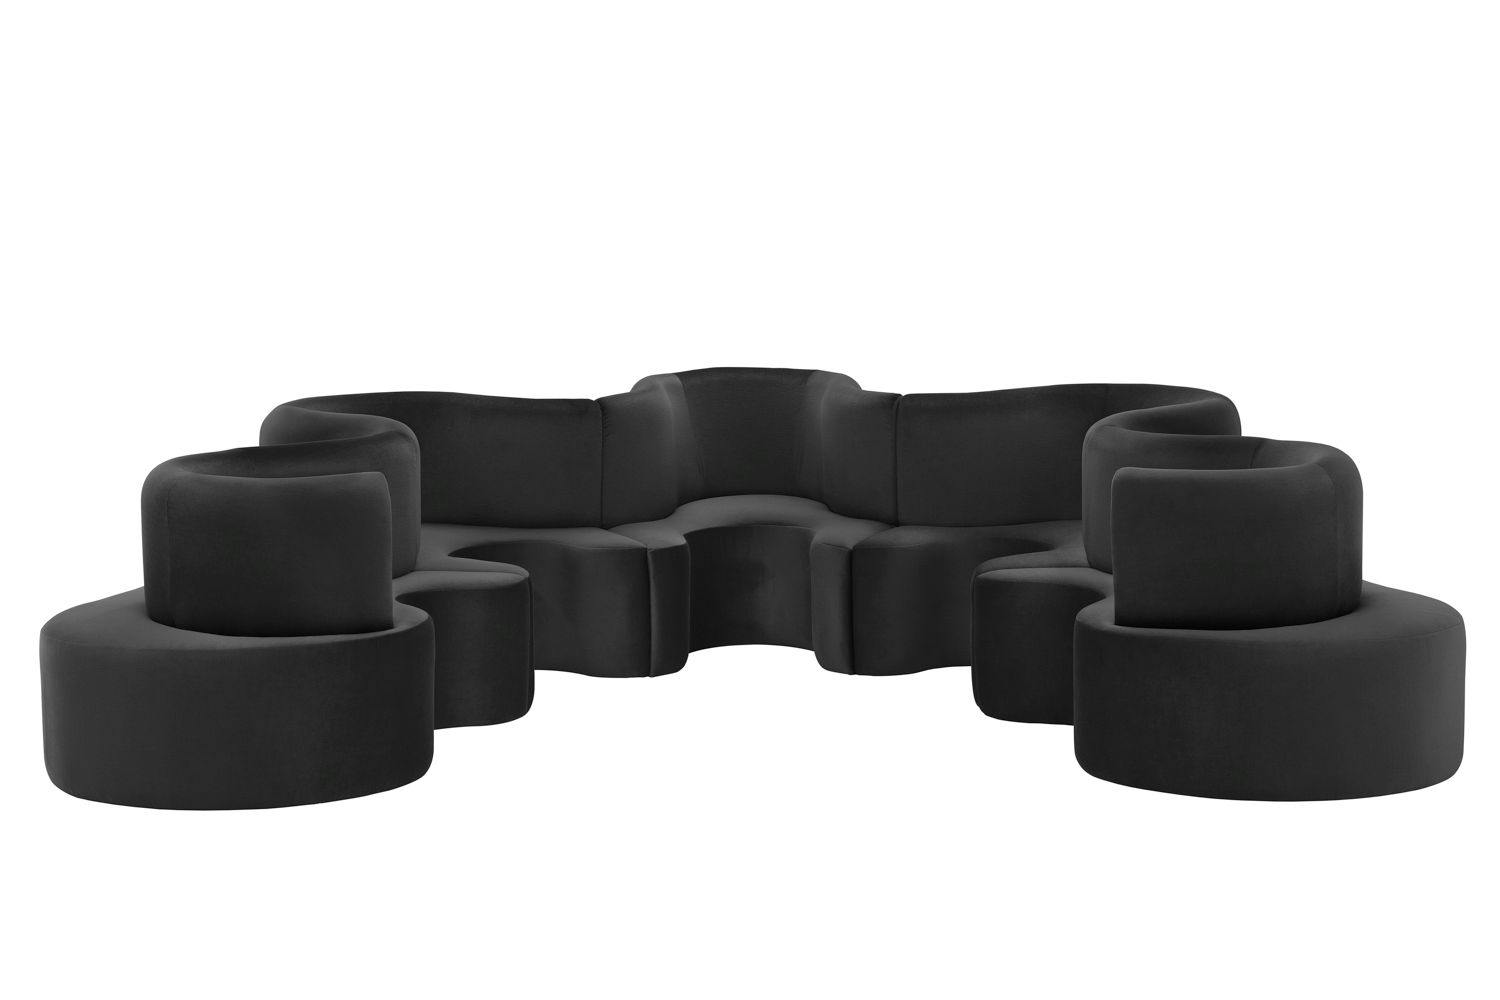 Cloverleaf Sofa - 5 Units by Verner Panton for Verpan | Space Furniture